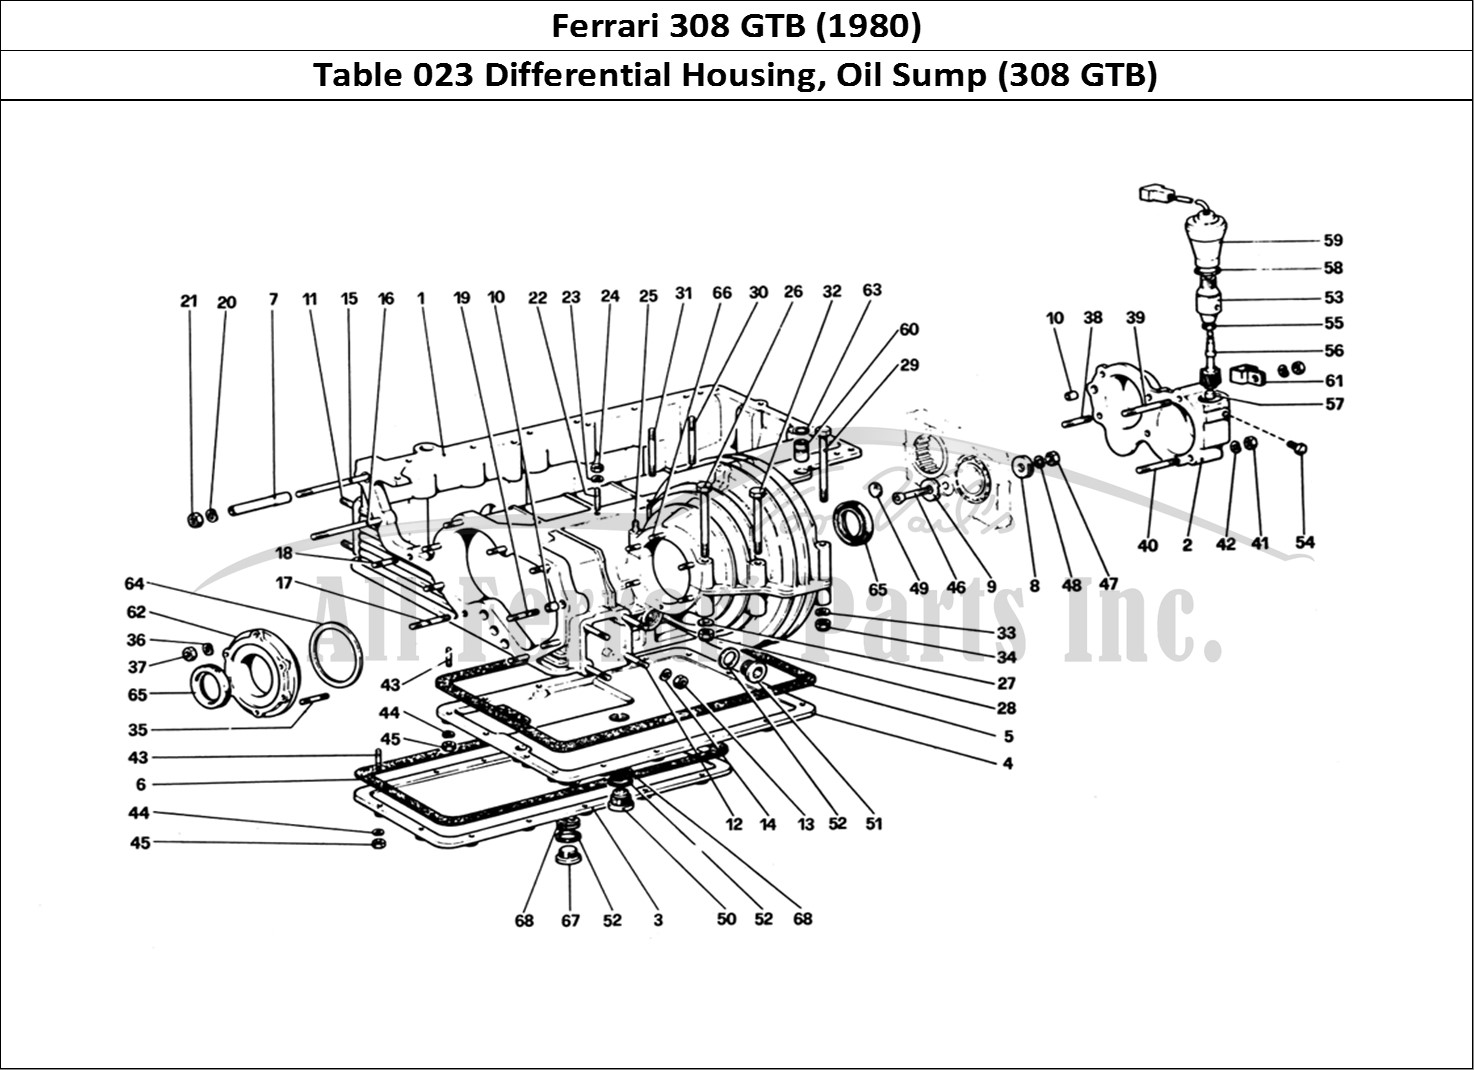 Ferrari Parts Ferrari 308 GTB (1980) Page 023 Gearbox - Differential Ho